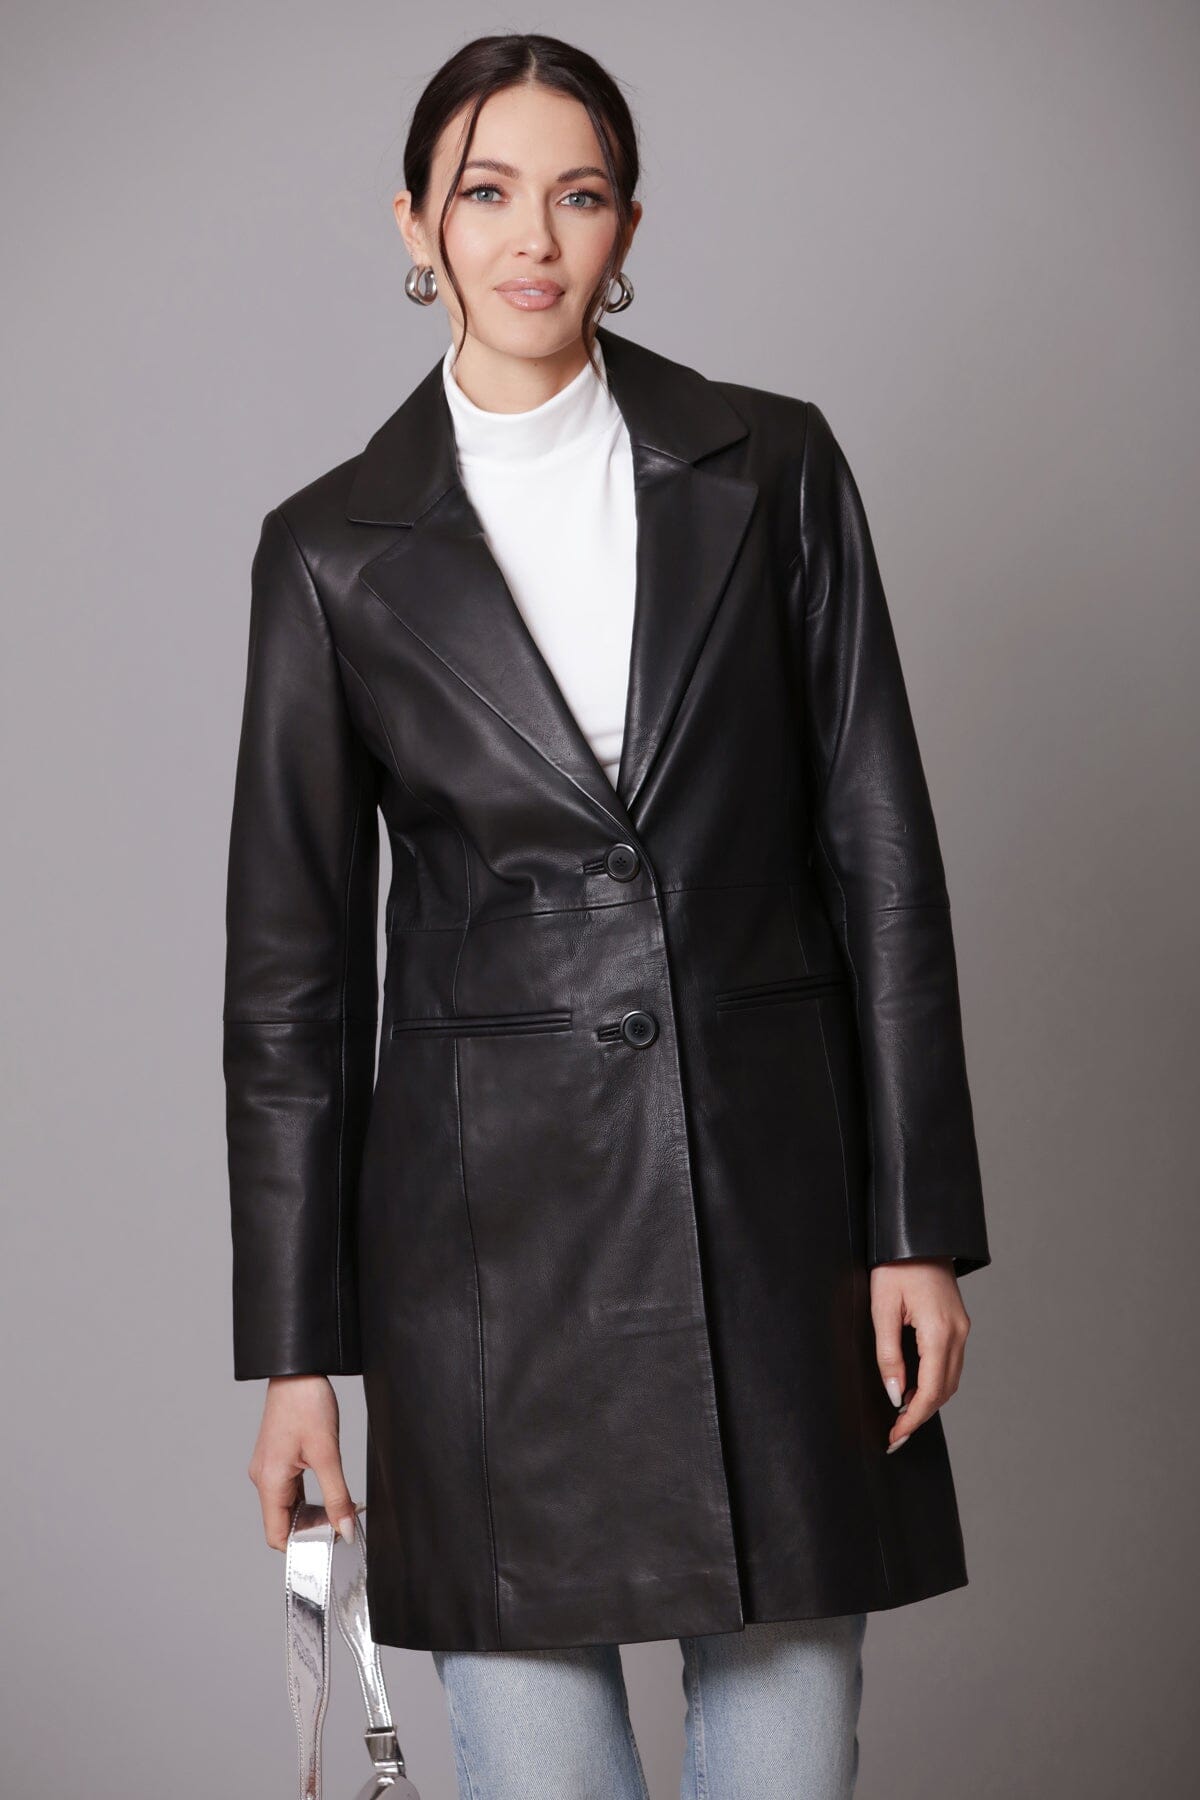 black genuine leather single breasted topper coat - women's figure flattering designer fashion work appropriate coats jackets